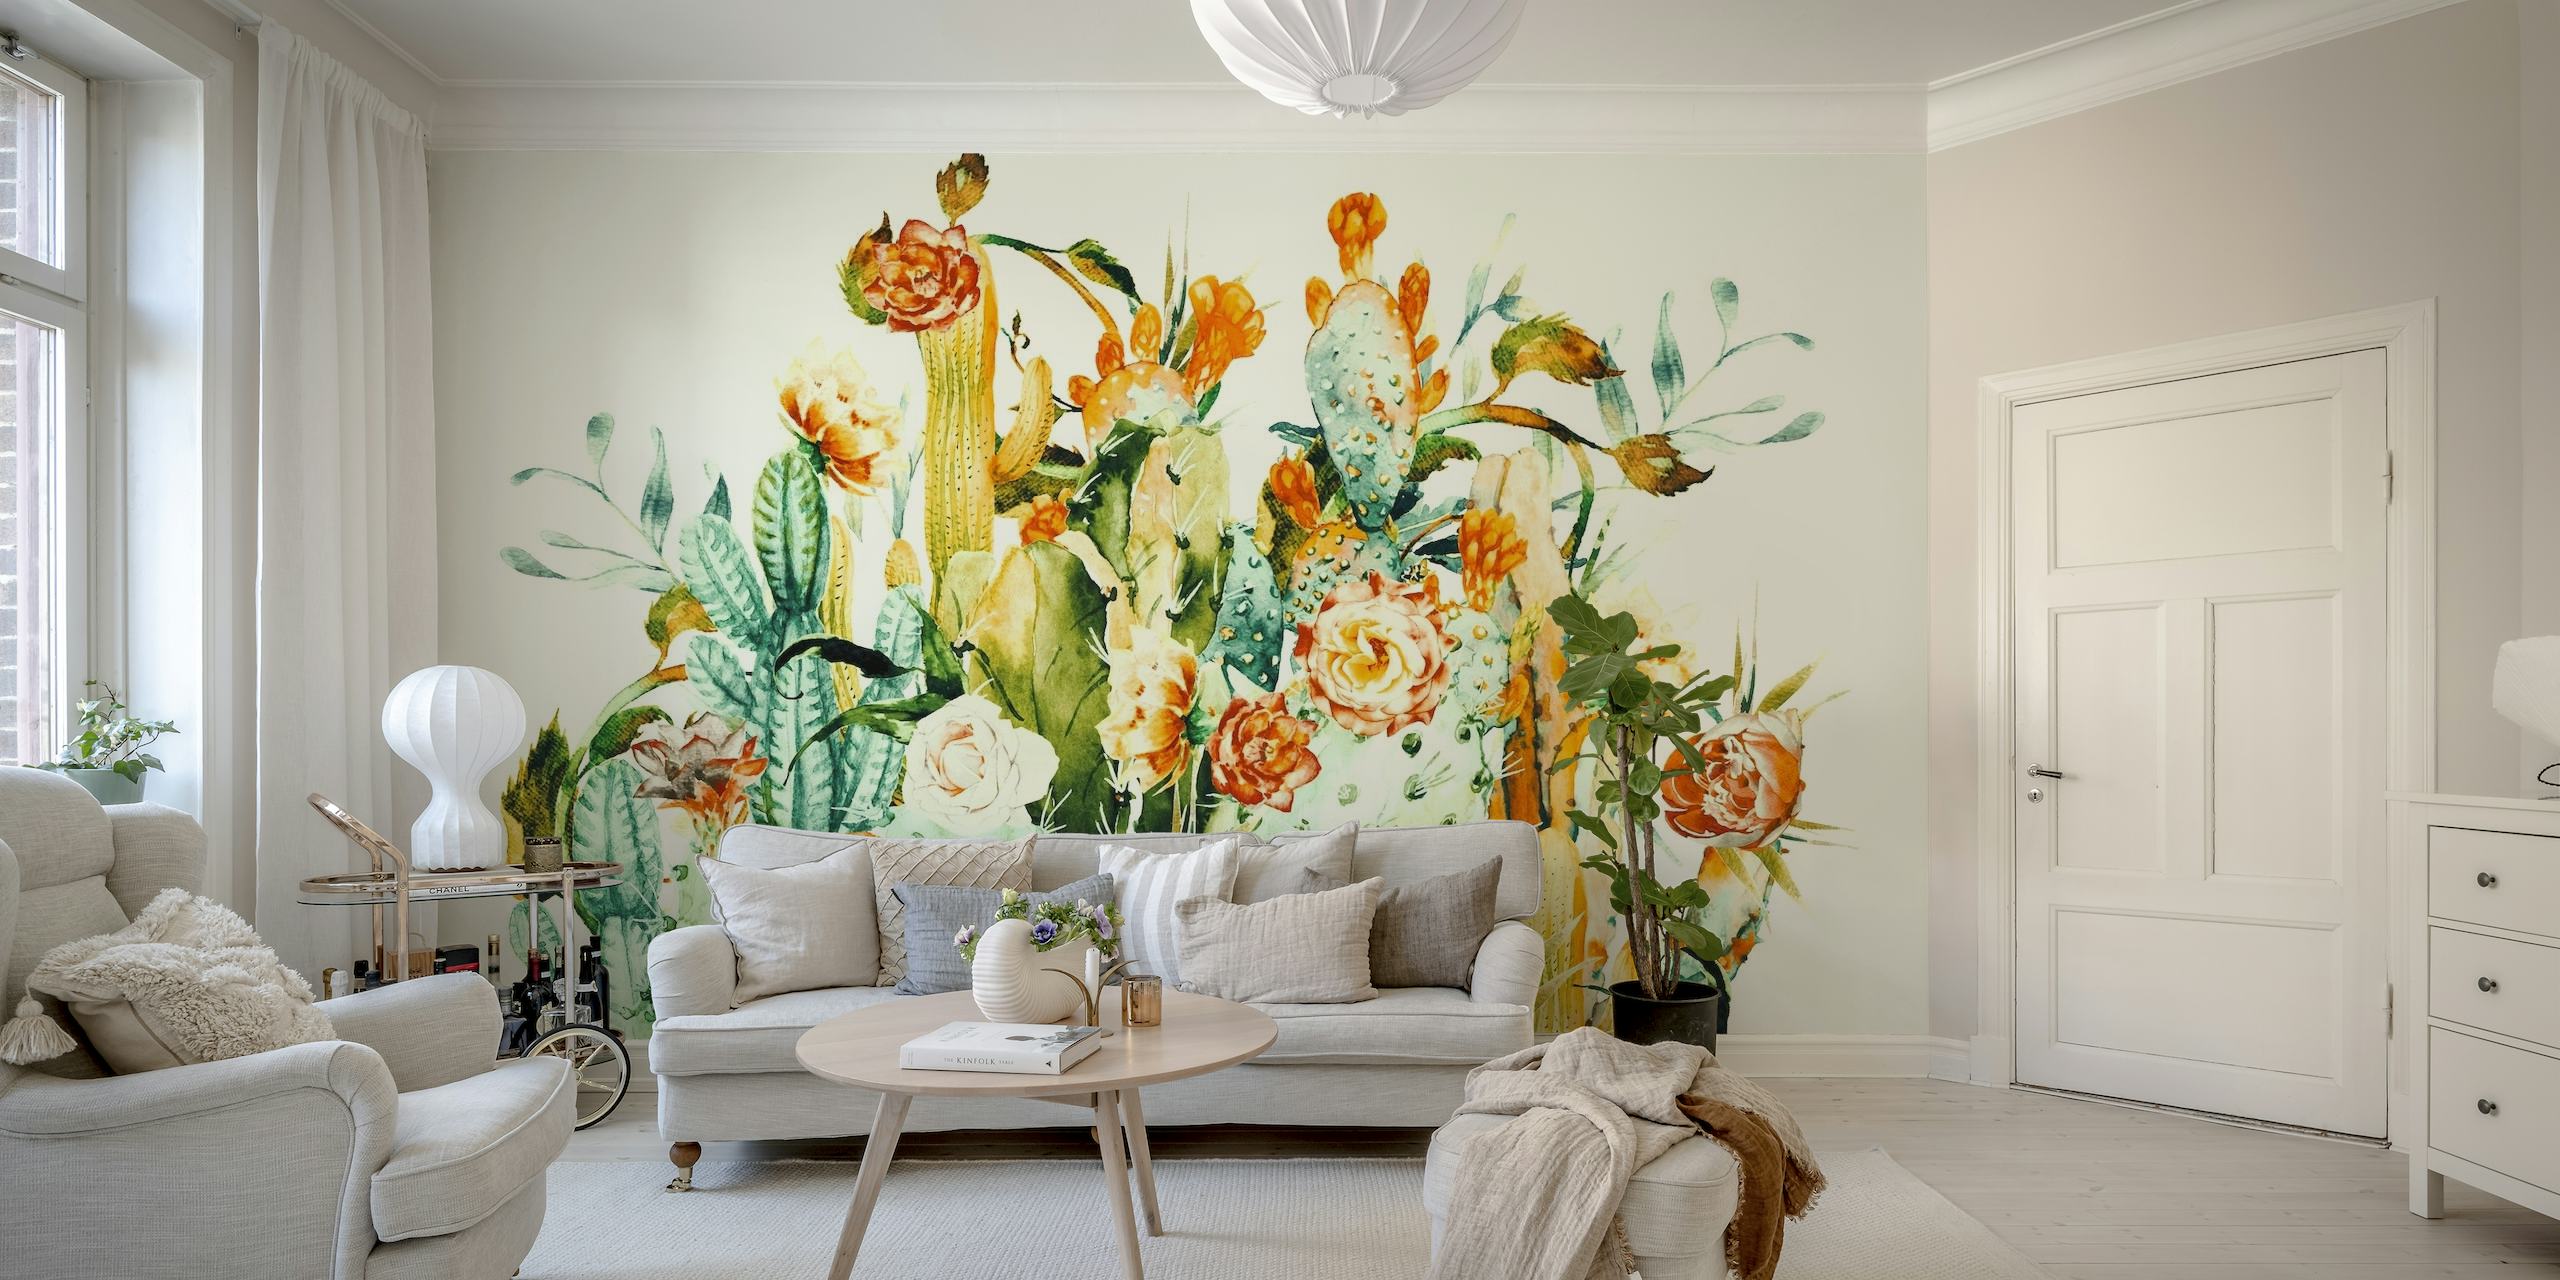 Blooming in the cactus wallpaper